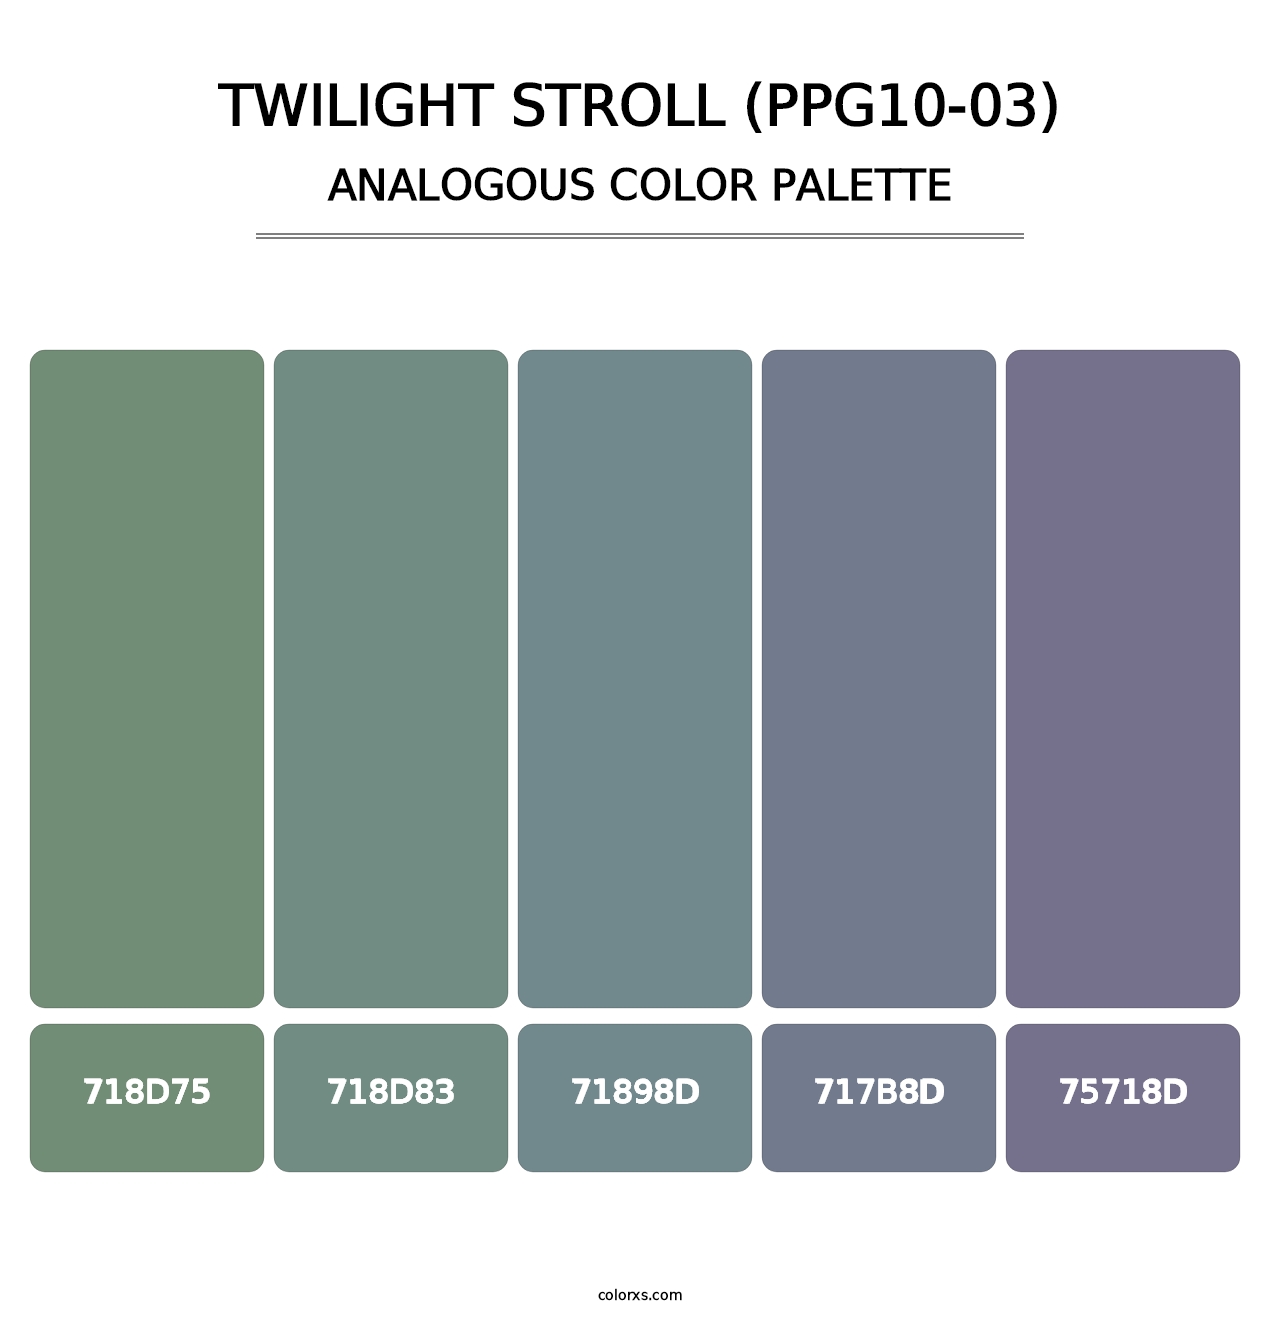 Twilight Stroll (PPG10-03) - Analogous Color Palette